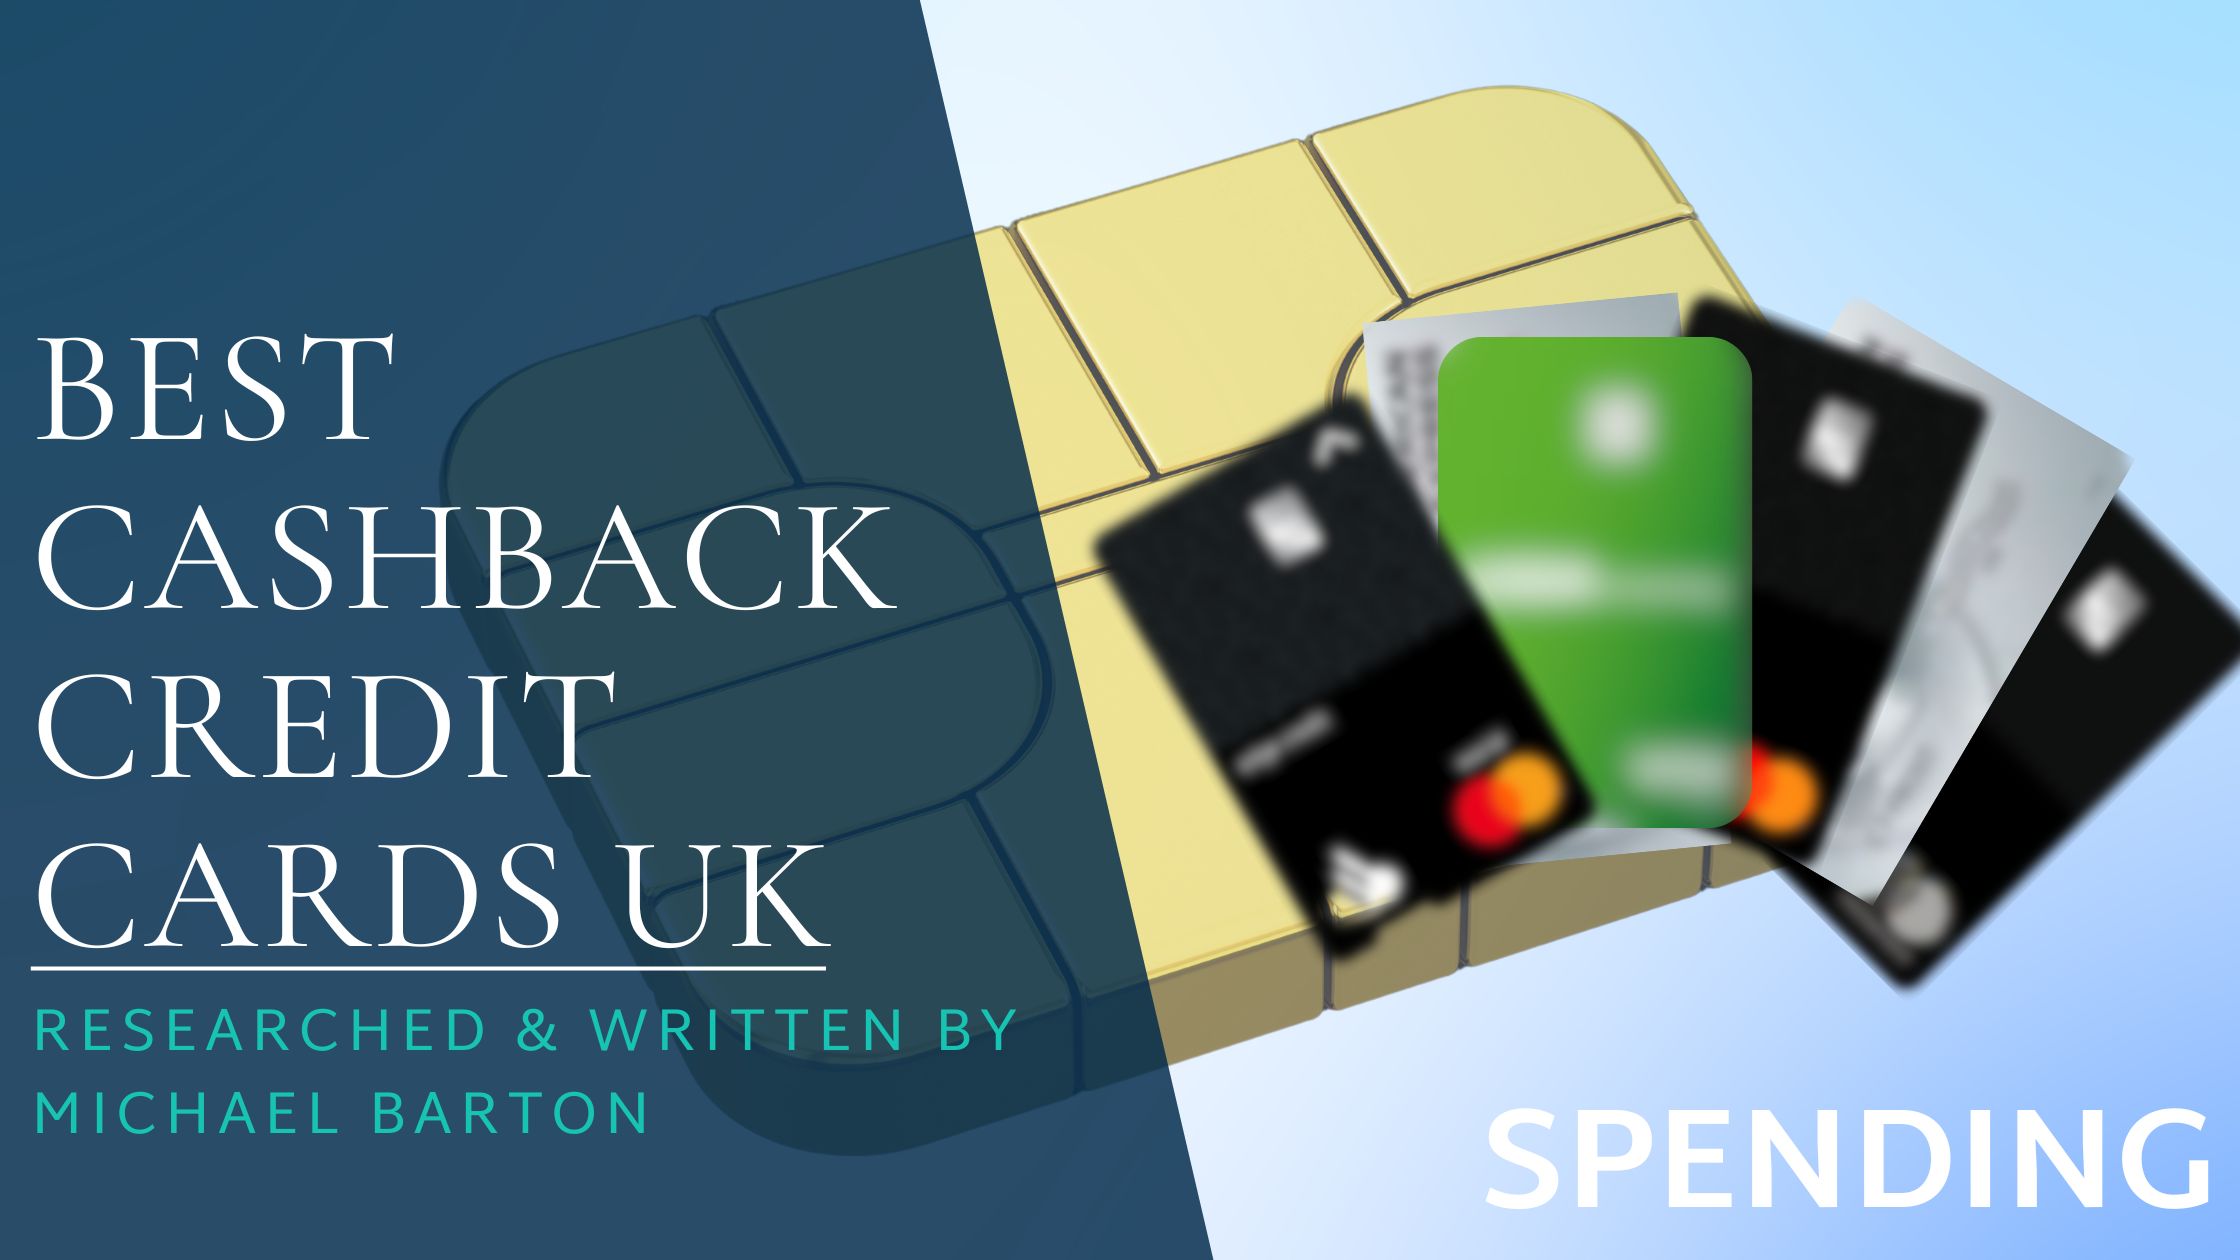 Best Cashback Credit Cards UK feature image